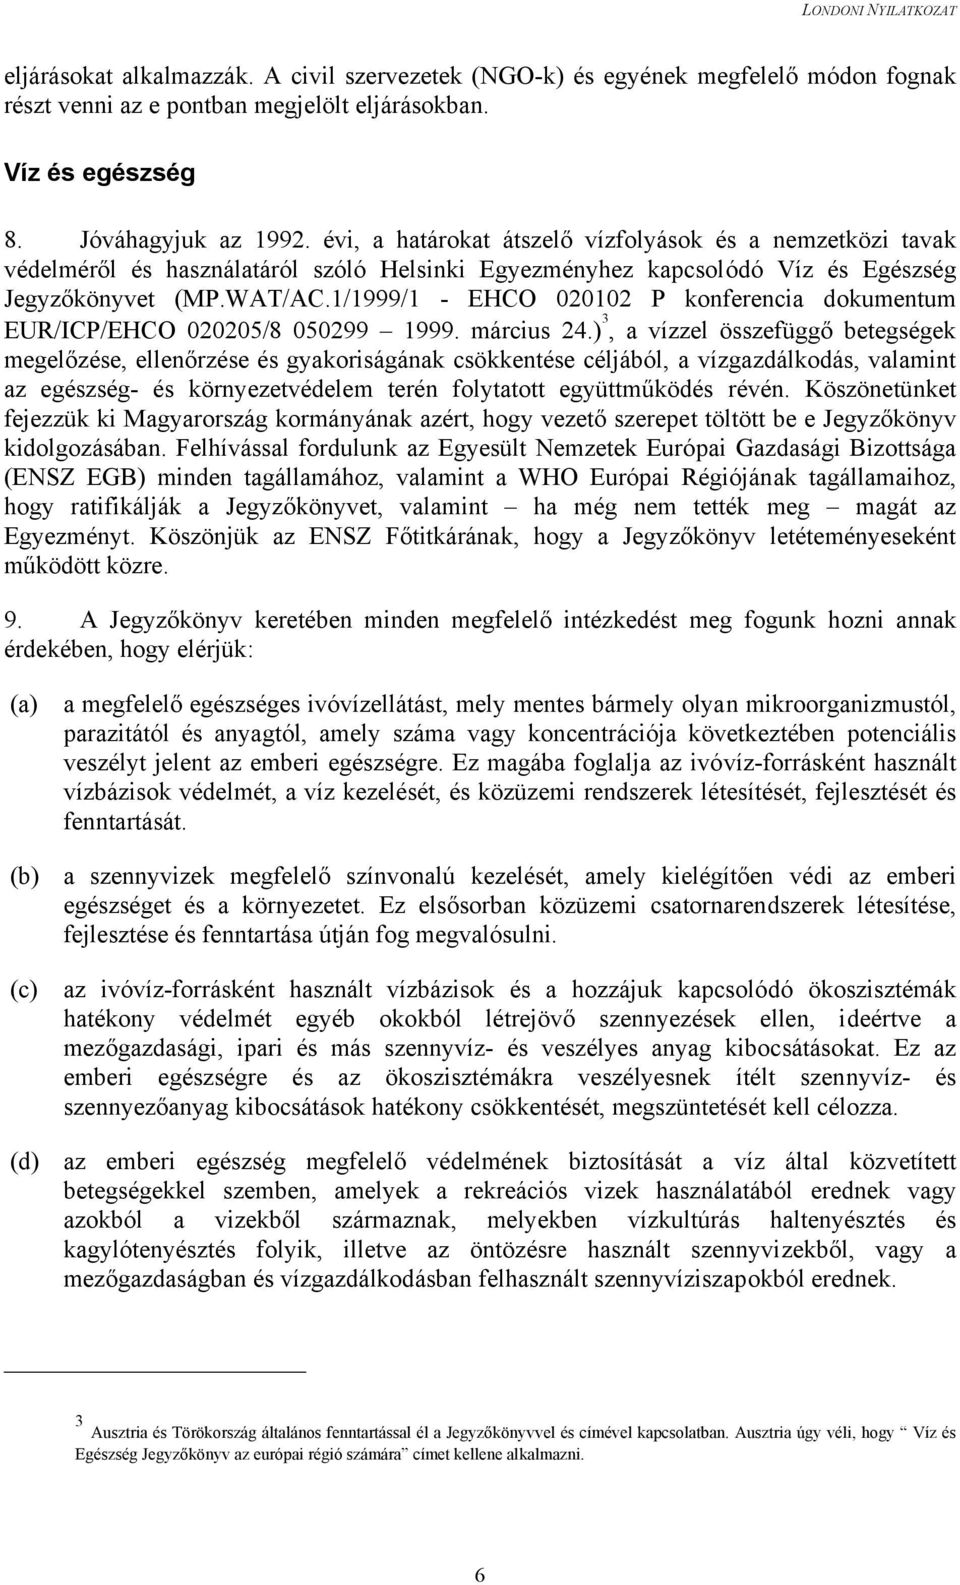 1/1999/1 - EHCO 020102 P konferencia dokumentum EUR/ICP/EHCO 020205/8 050299 1999. március 24.